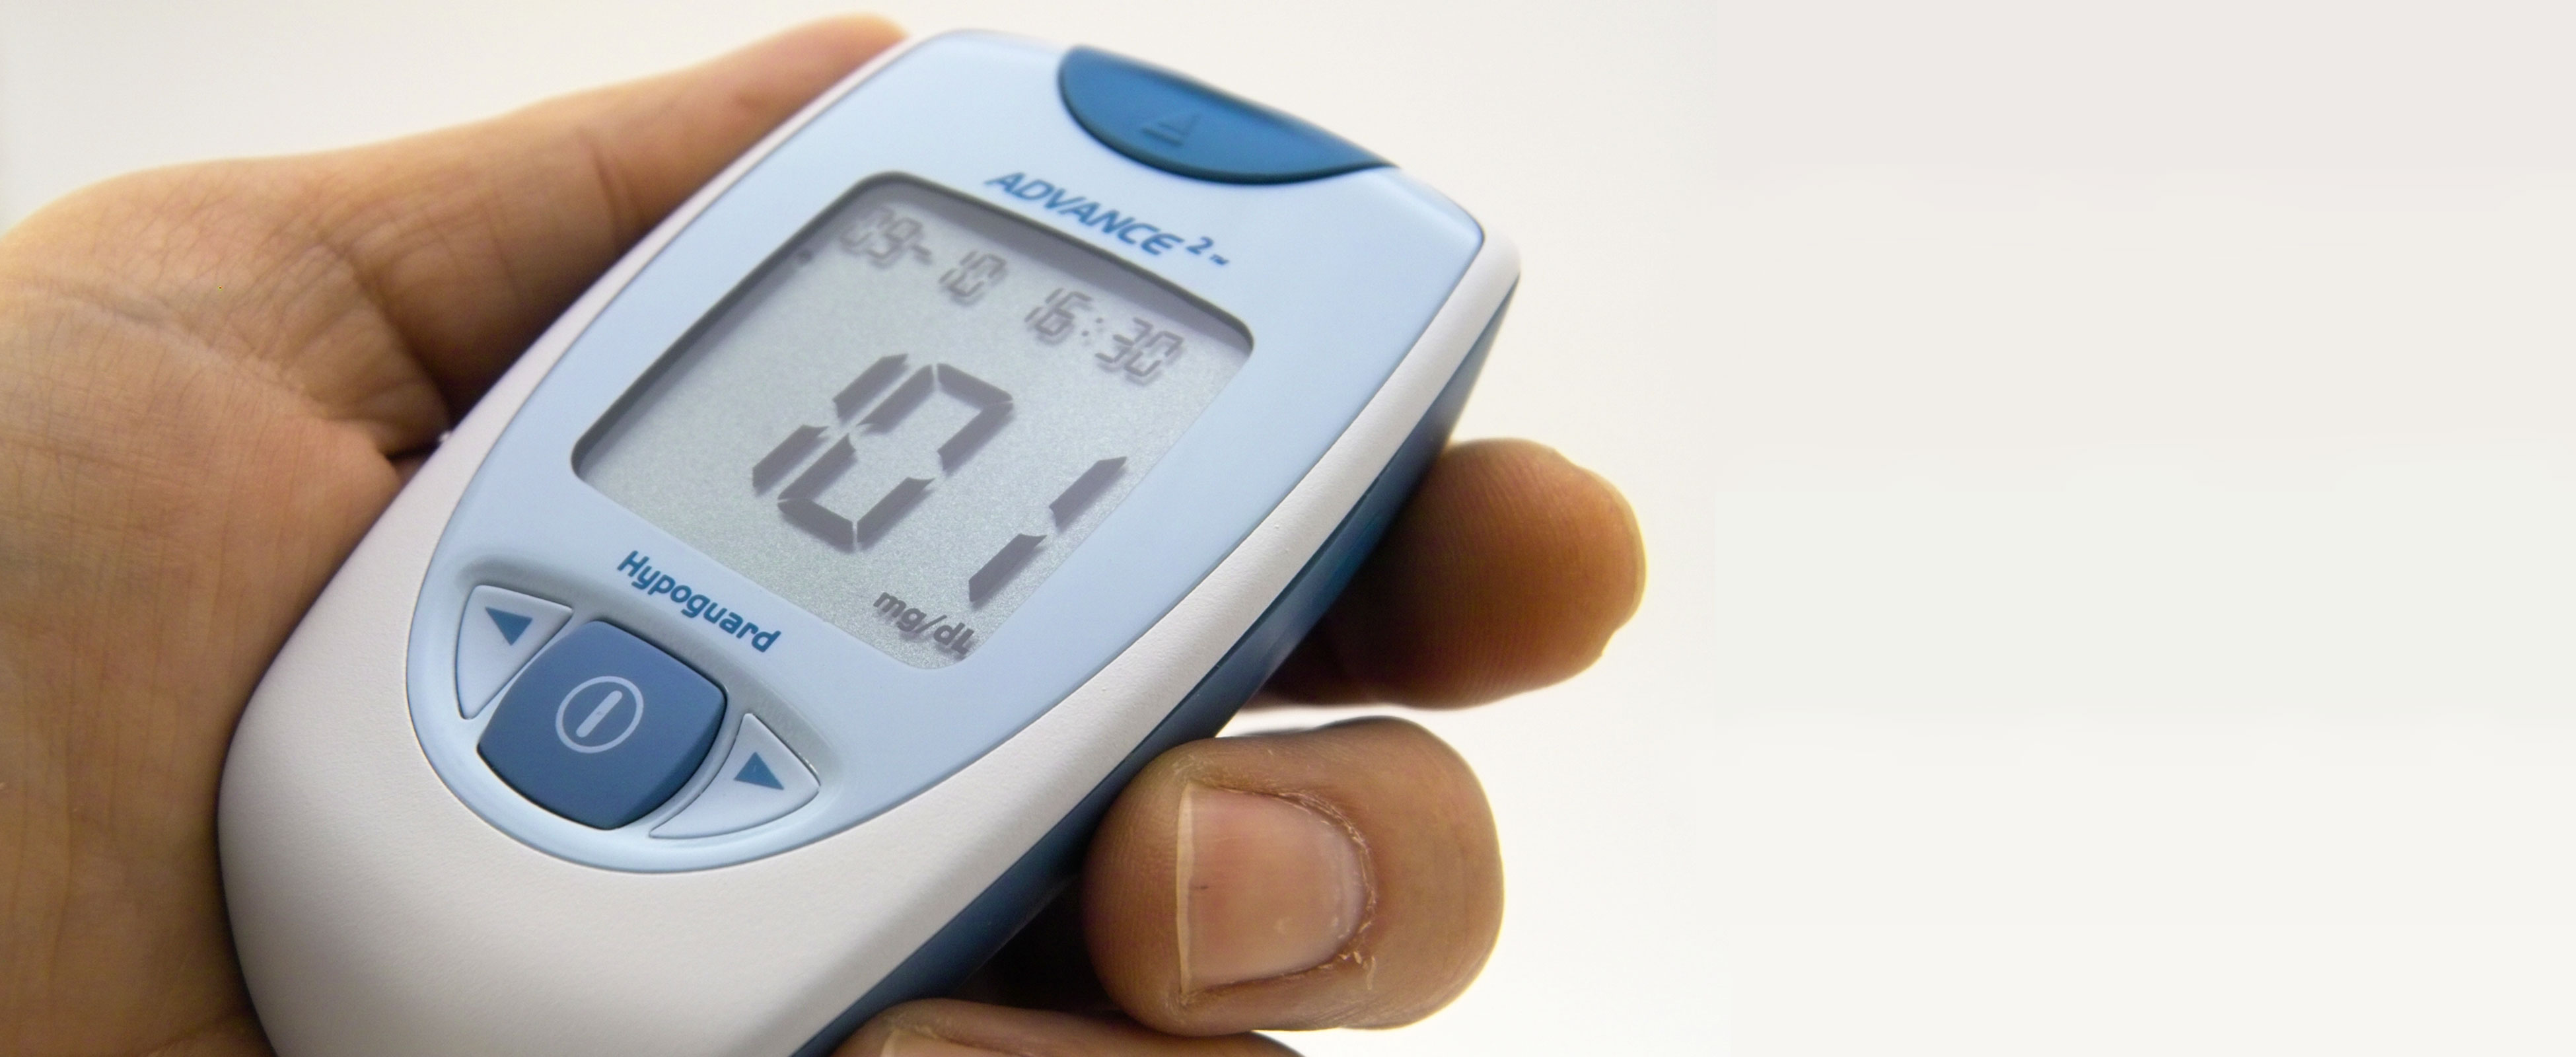 Assure Pro blood glucose meter designed by Gm Design Development